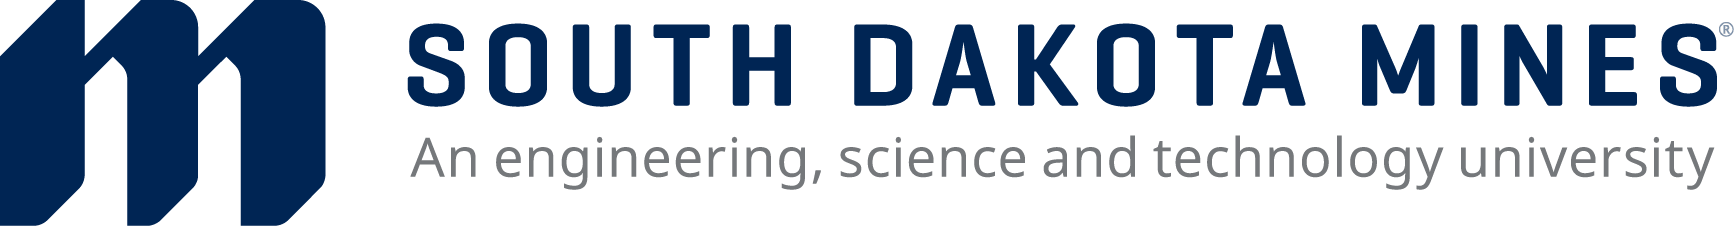 South Dakota Mines Logo.